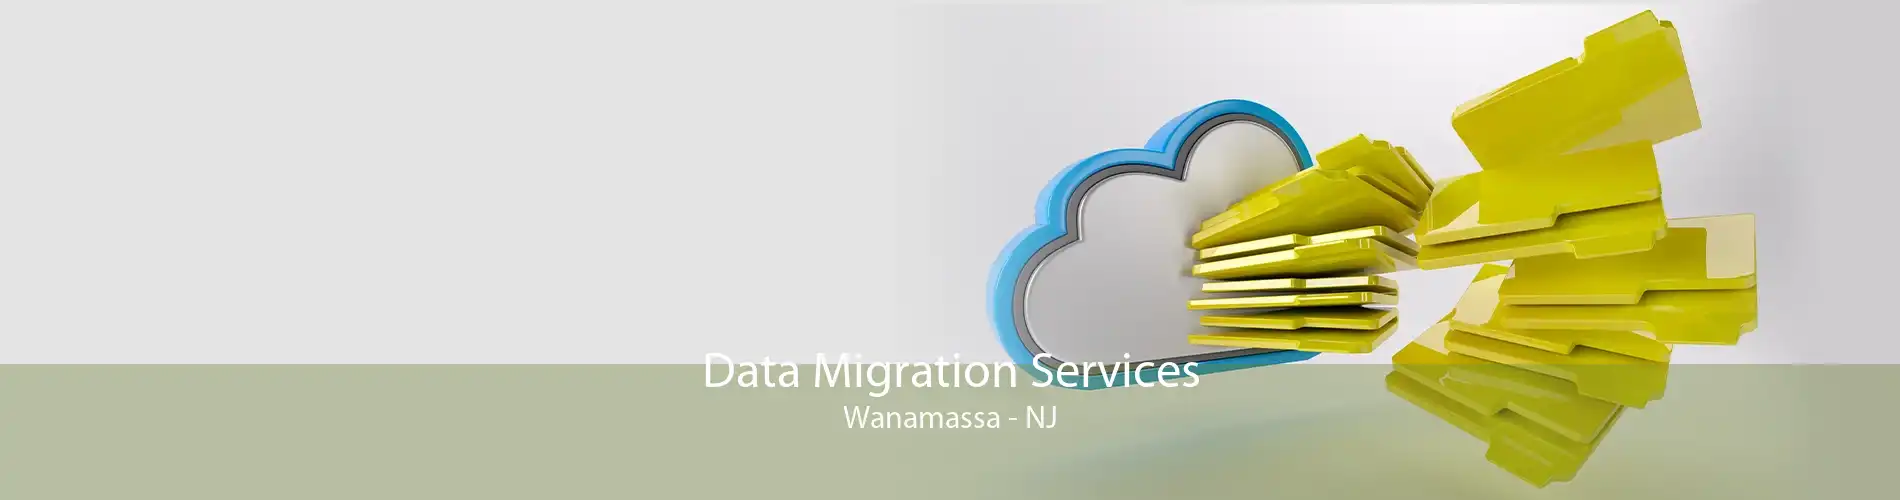 Data Migration Services Wanamassa - NJ